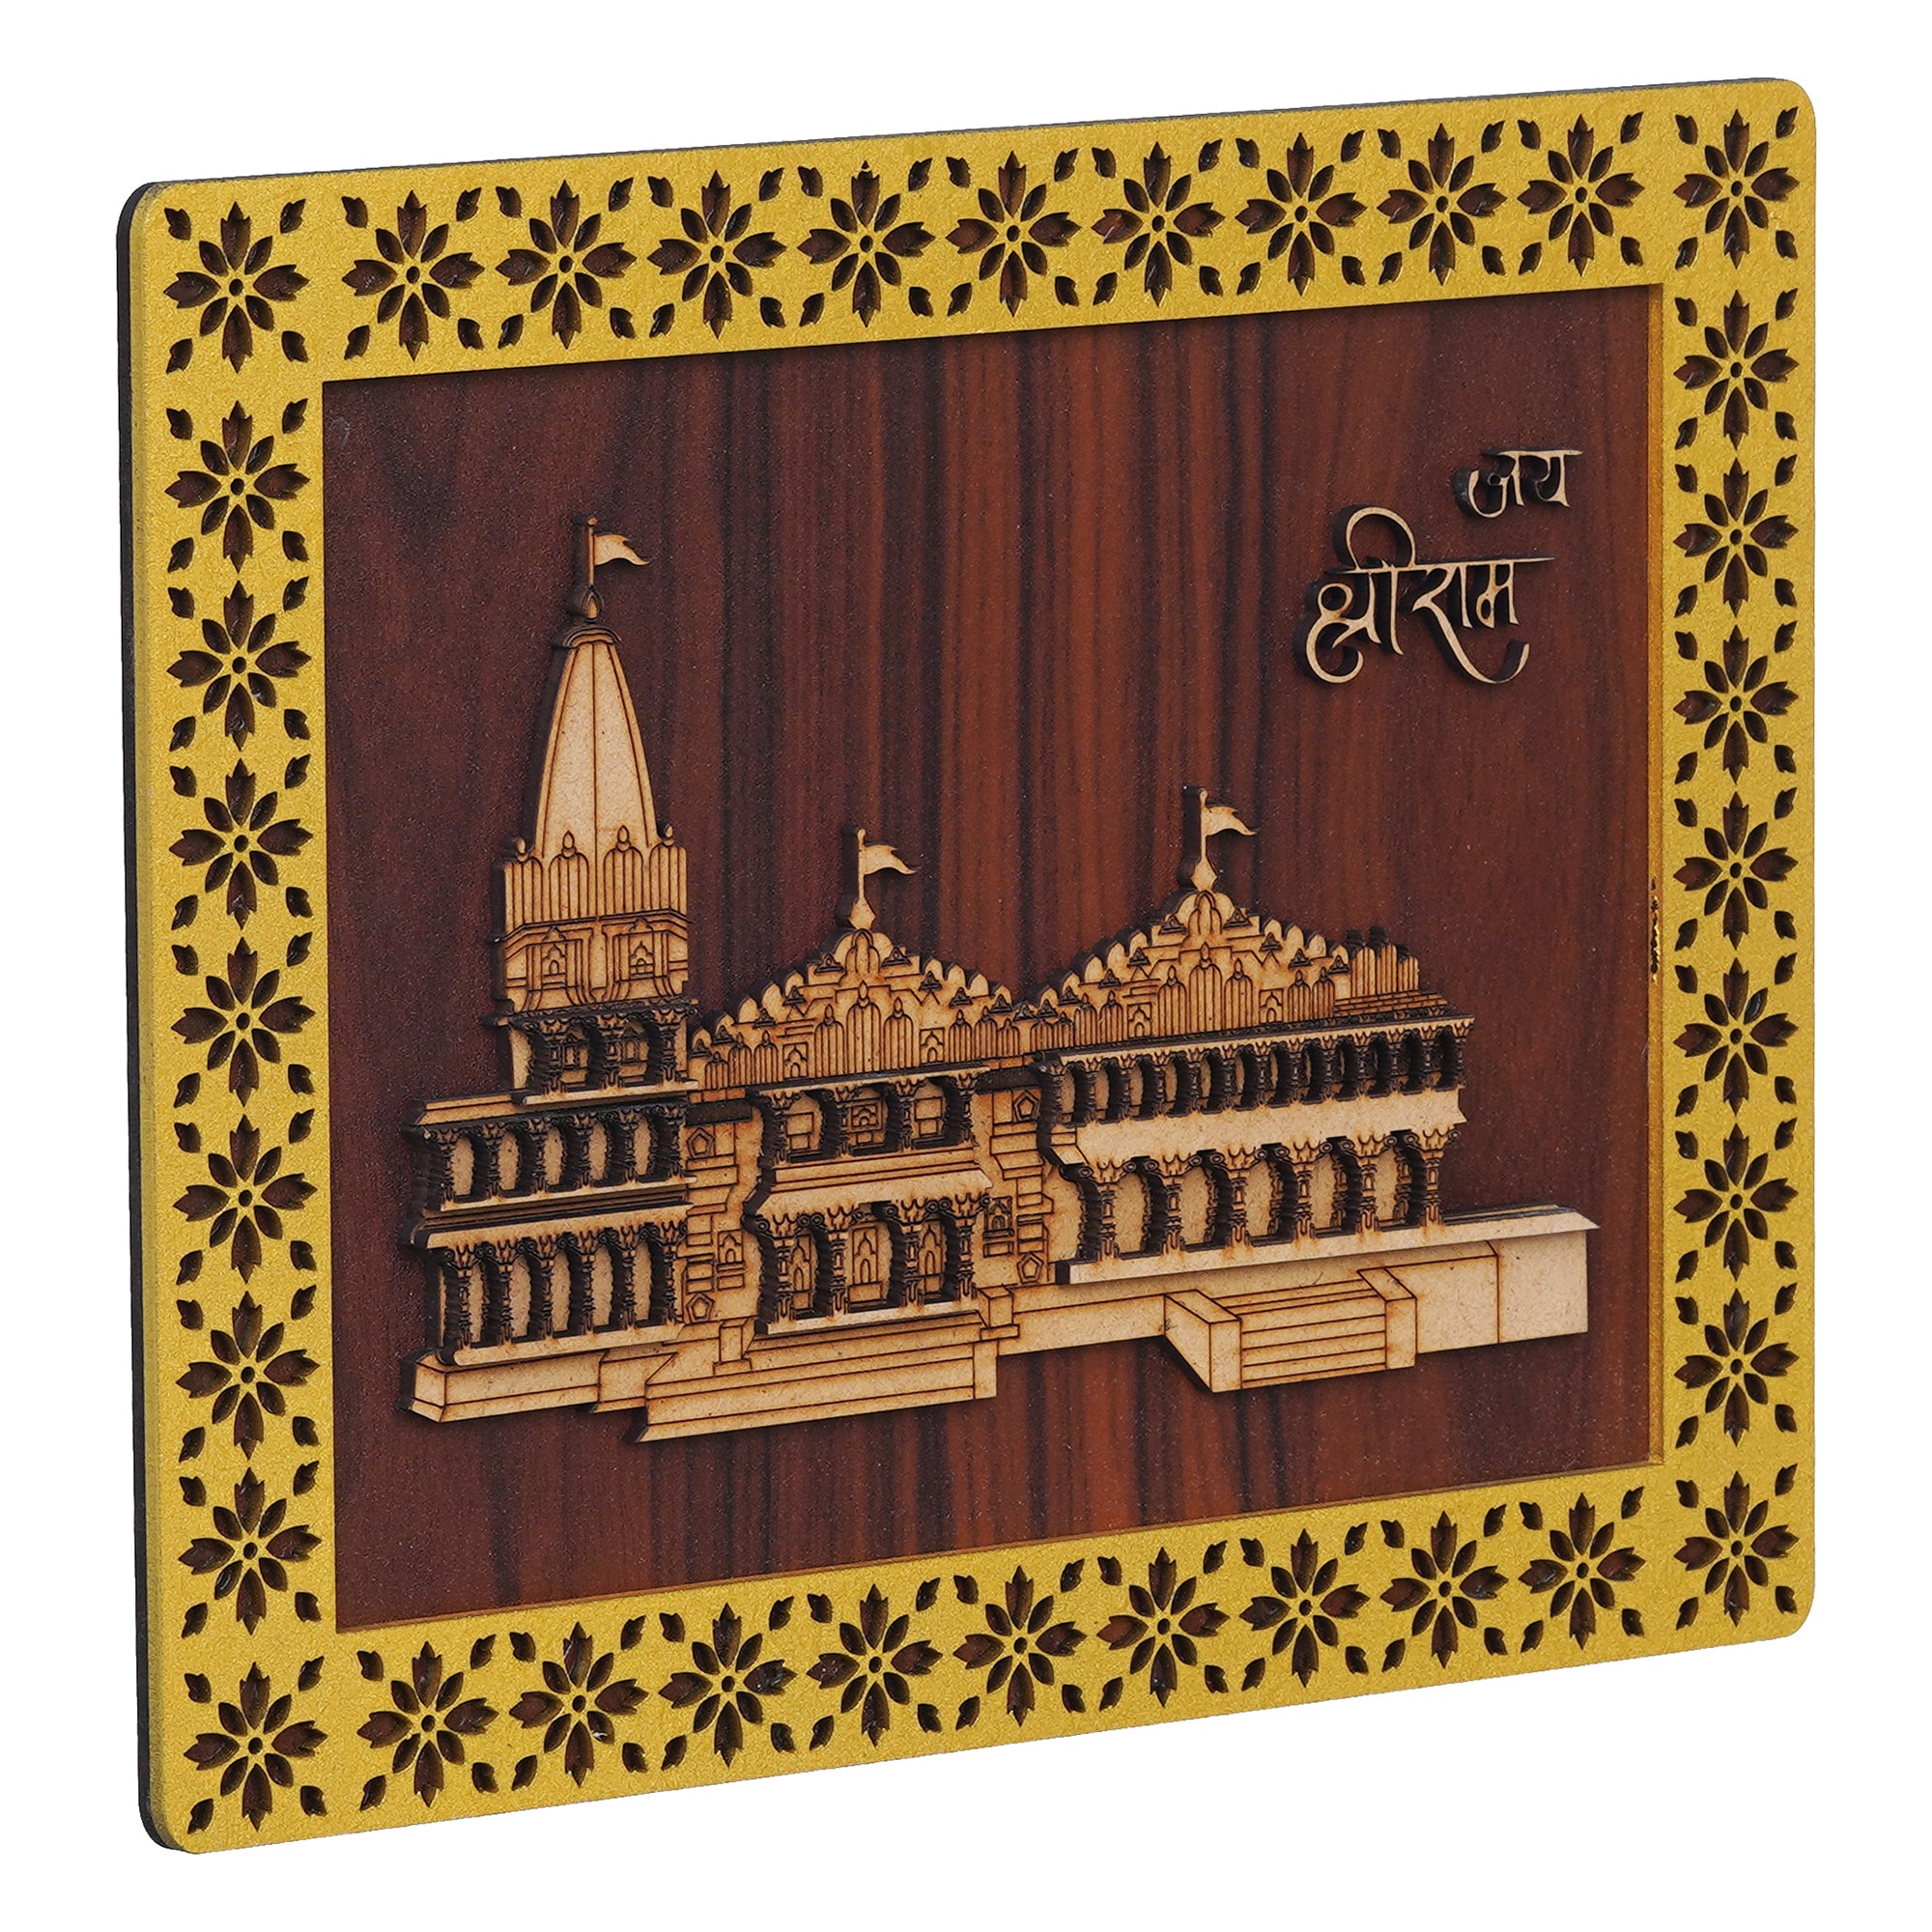 eCraftIndia Jai Shri Ram Mandir Ayodhya Decorative Wooden Frame - Religious Wall Hanging Showpiece for Home Decor, and Spiritual Gifting (Gold, Beige) 6